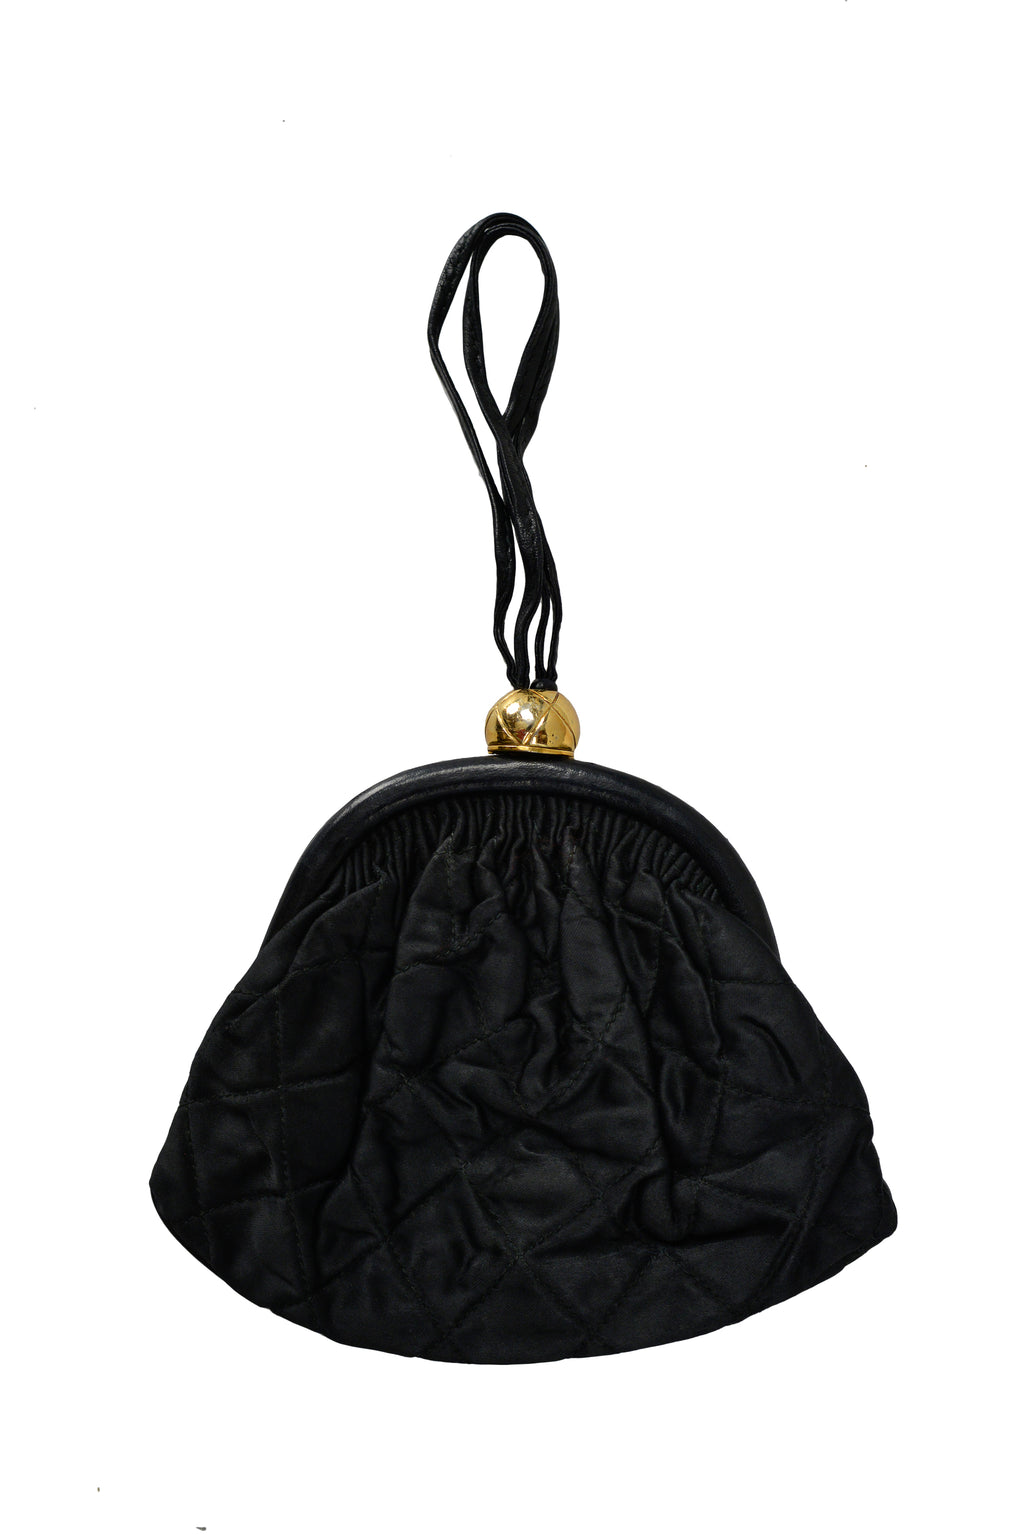 Tan Chanel CC Embossed Leather Tote Bag – Designer Revival